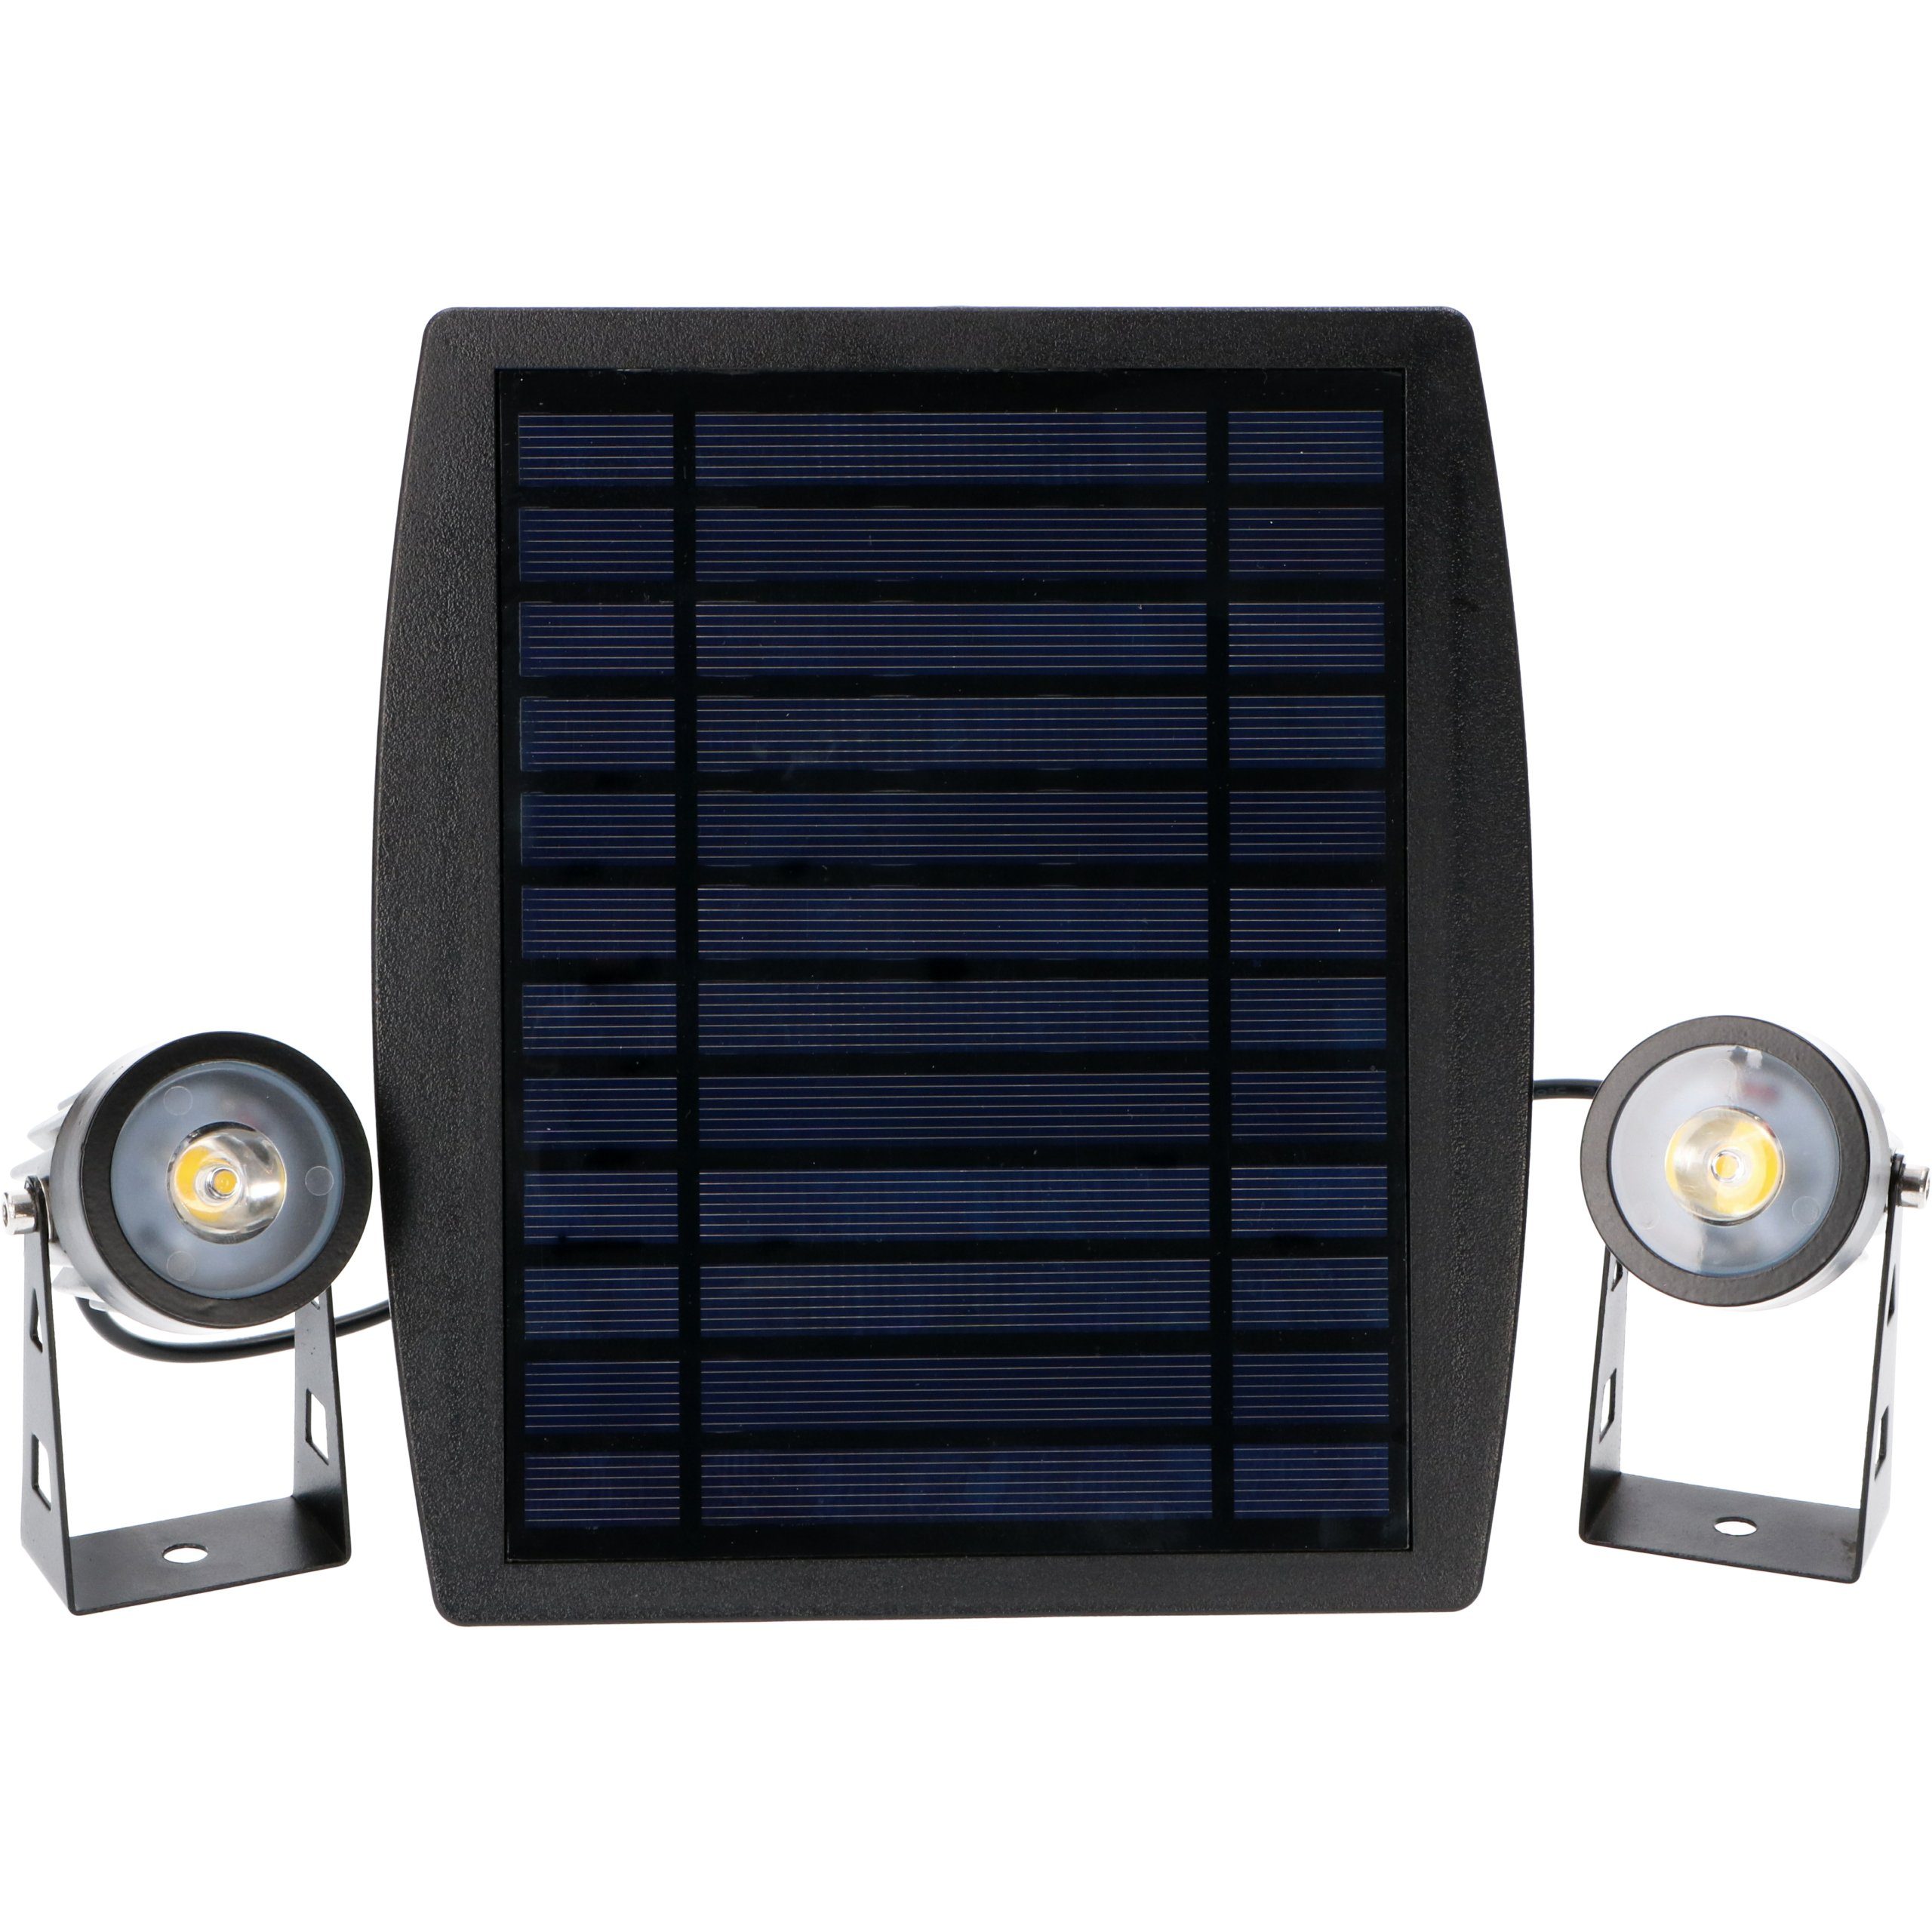 LED's light LED Solarleuchte 1000424 warmweiß 1,5W LED-Gartenspots, Solar LED